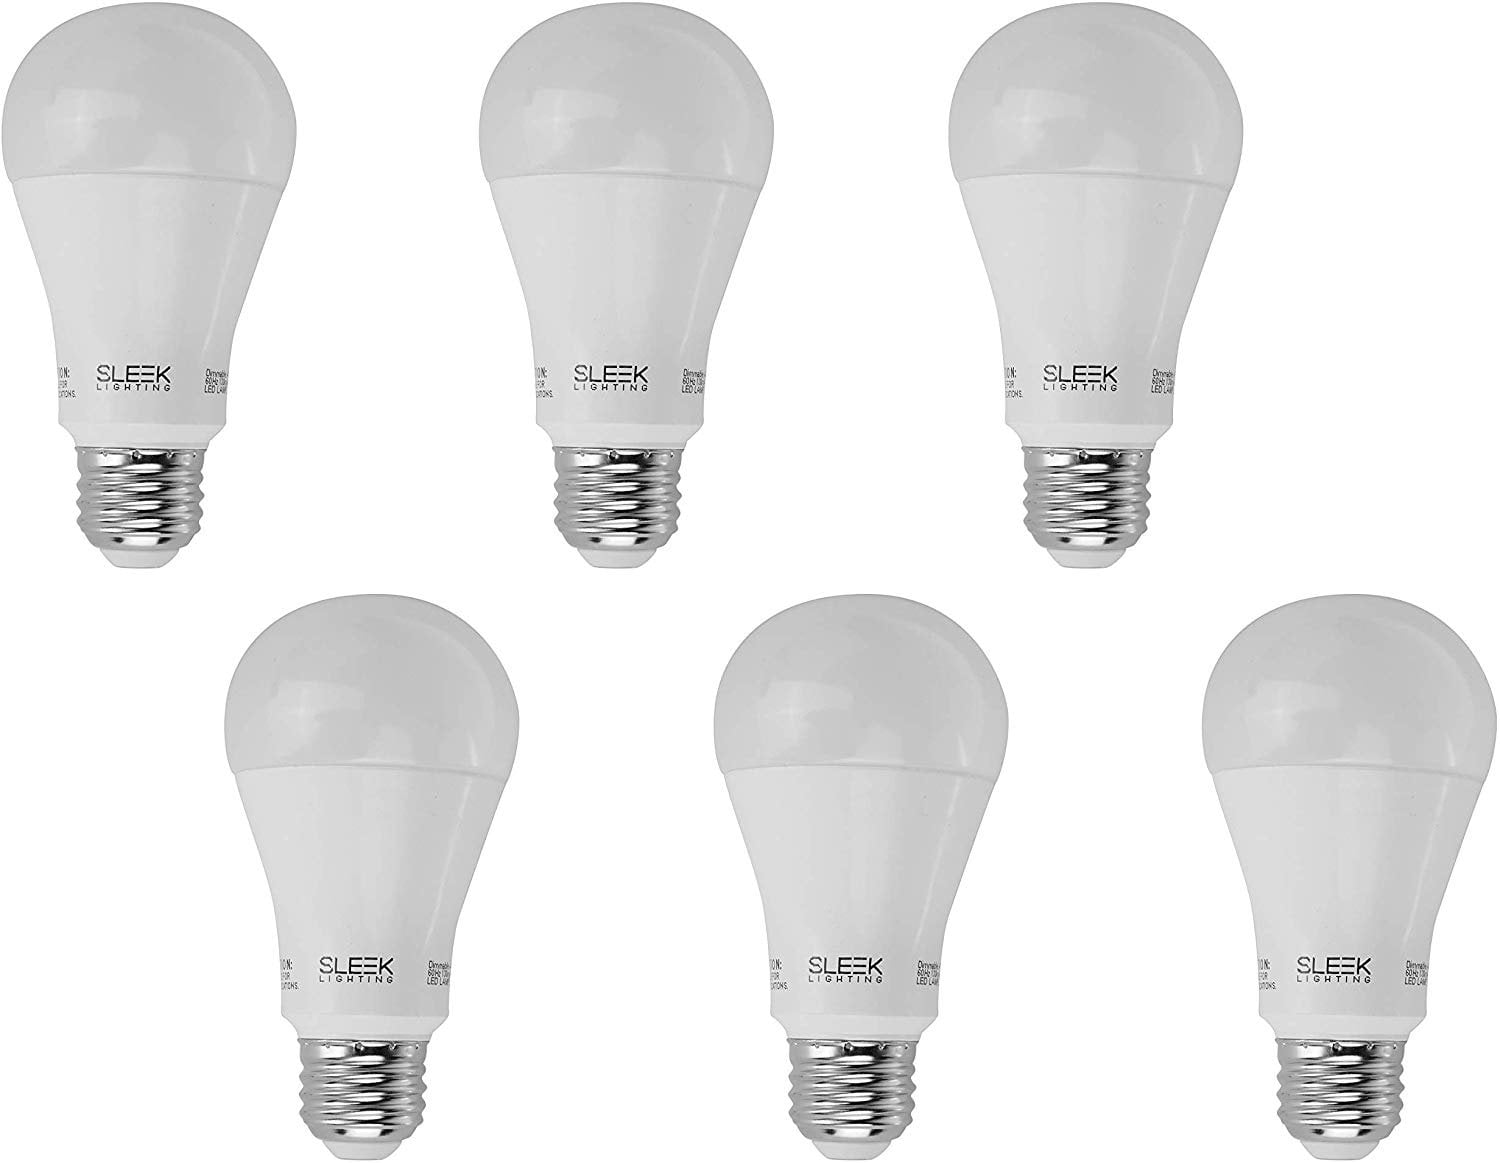 Multipurpose Lightbulb – All-purpose lightbulb with a medium E26.